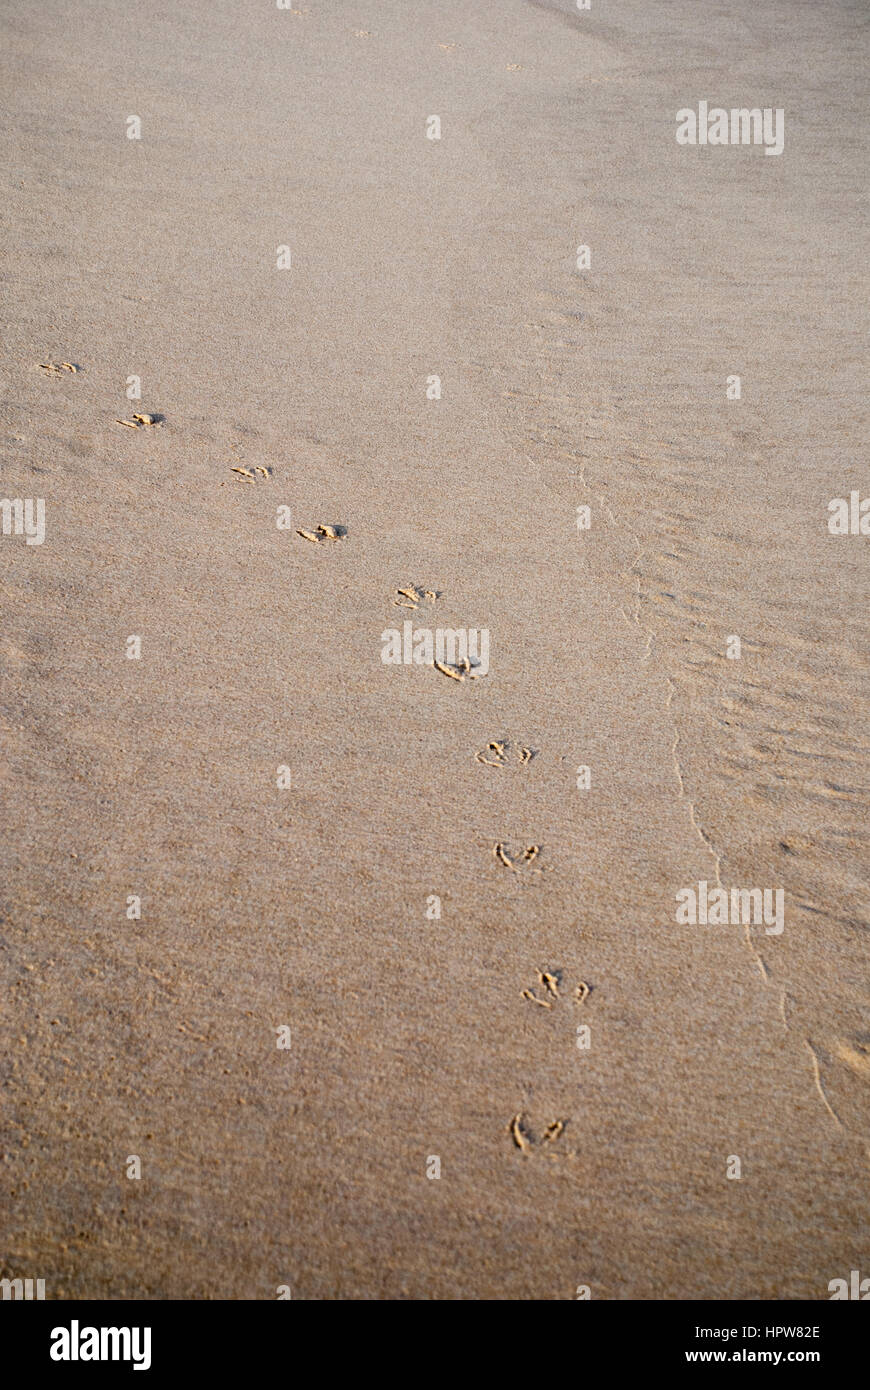 Bird footprints in sand on a beach Stock Photo